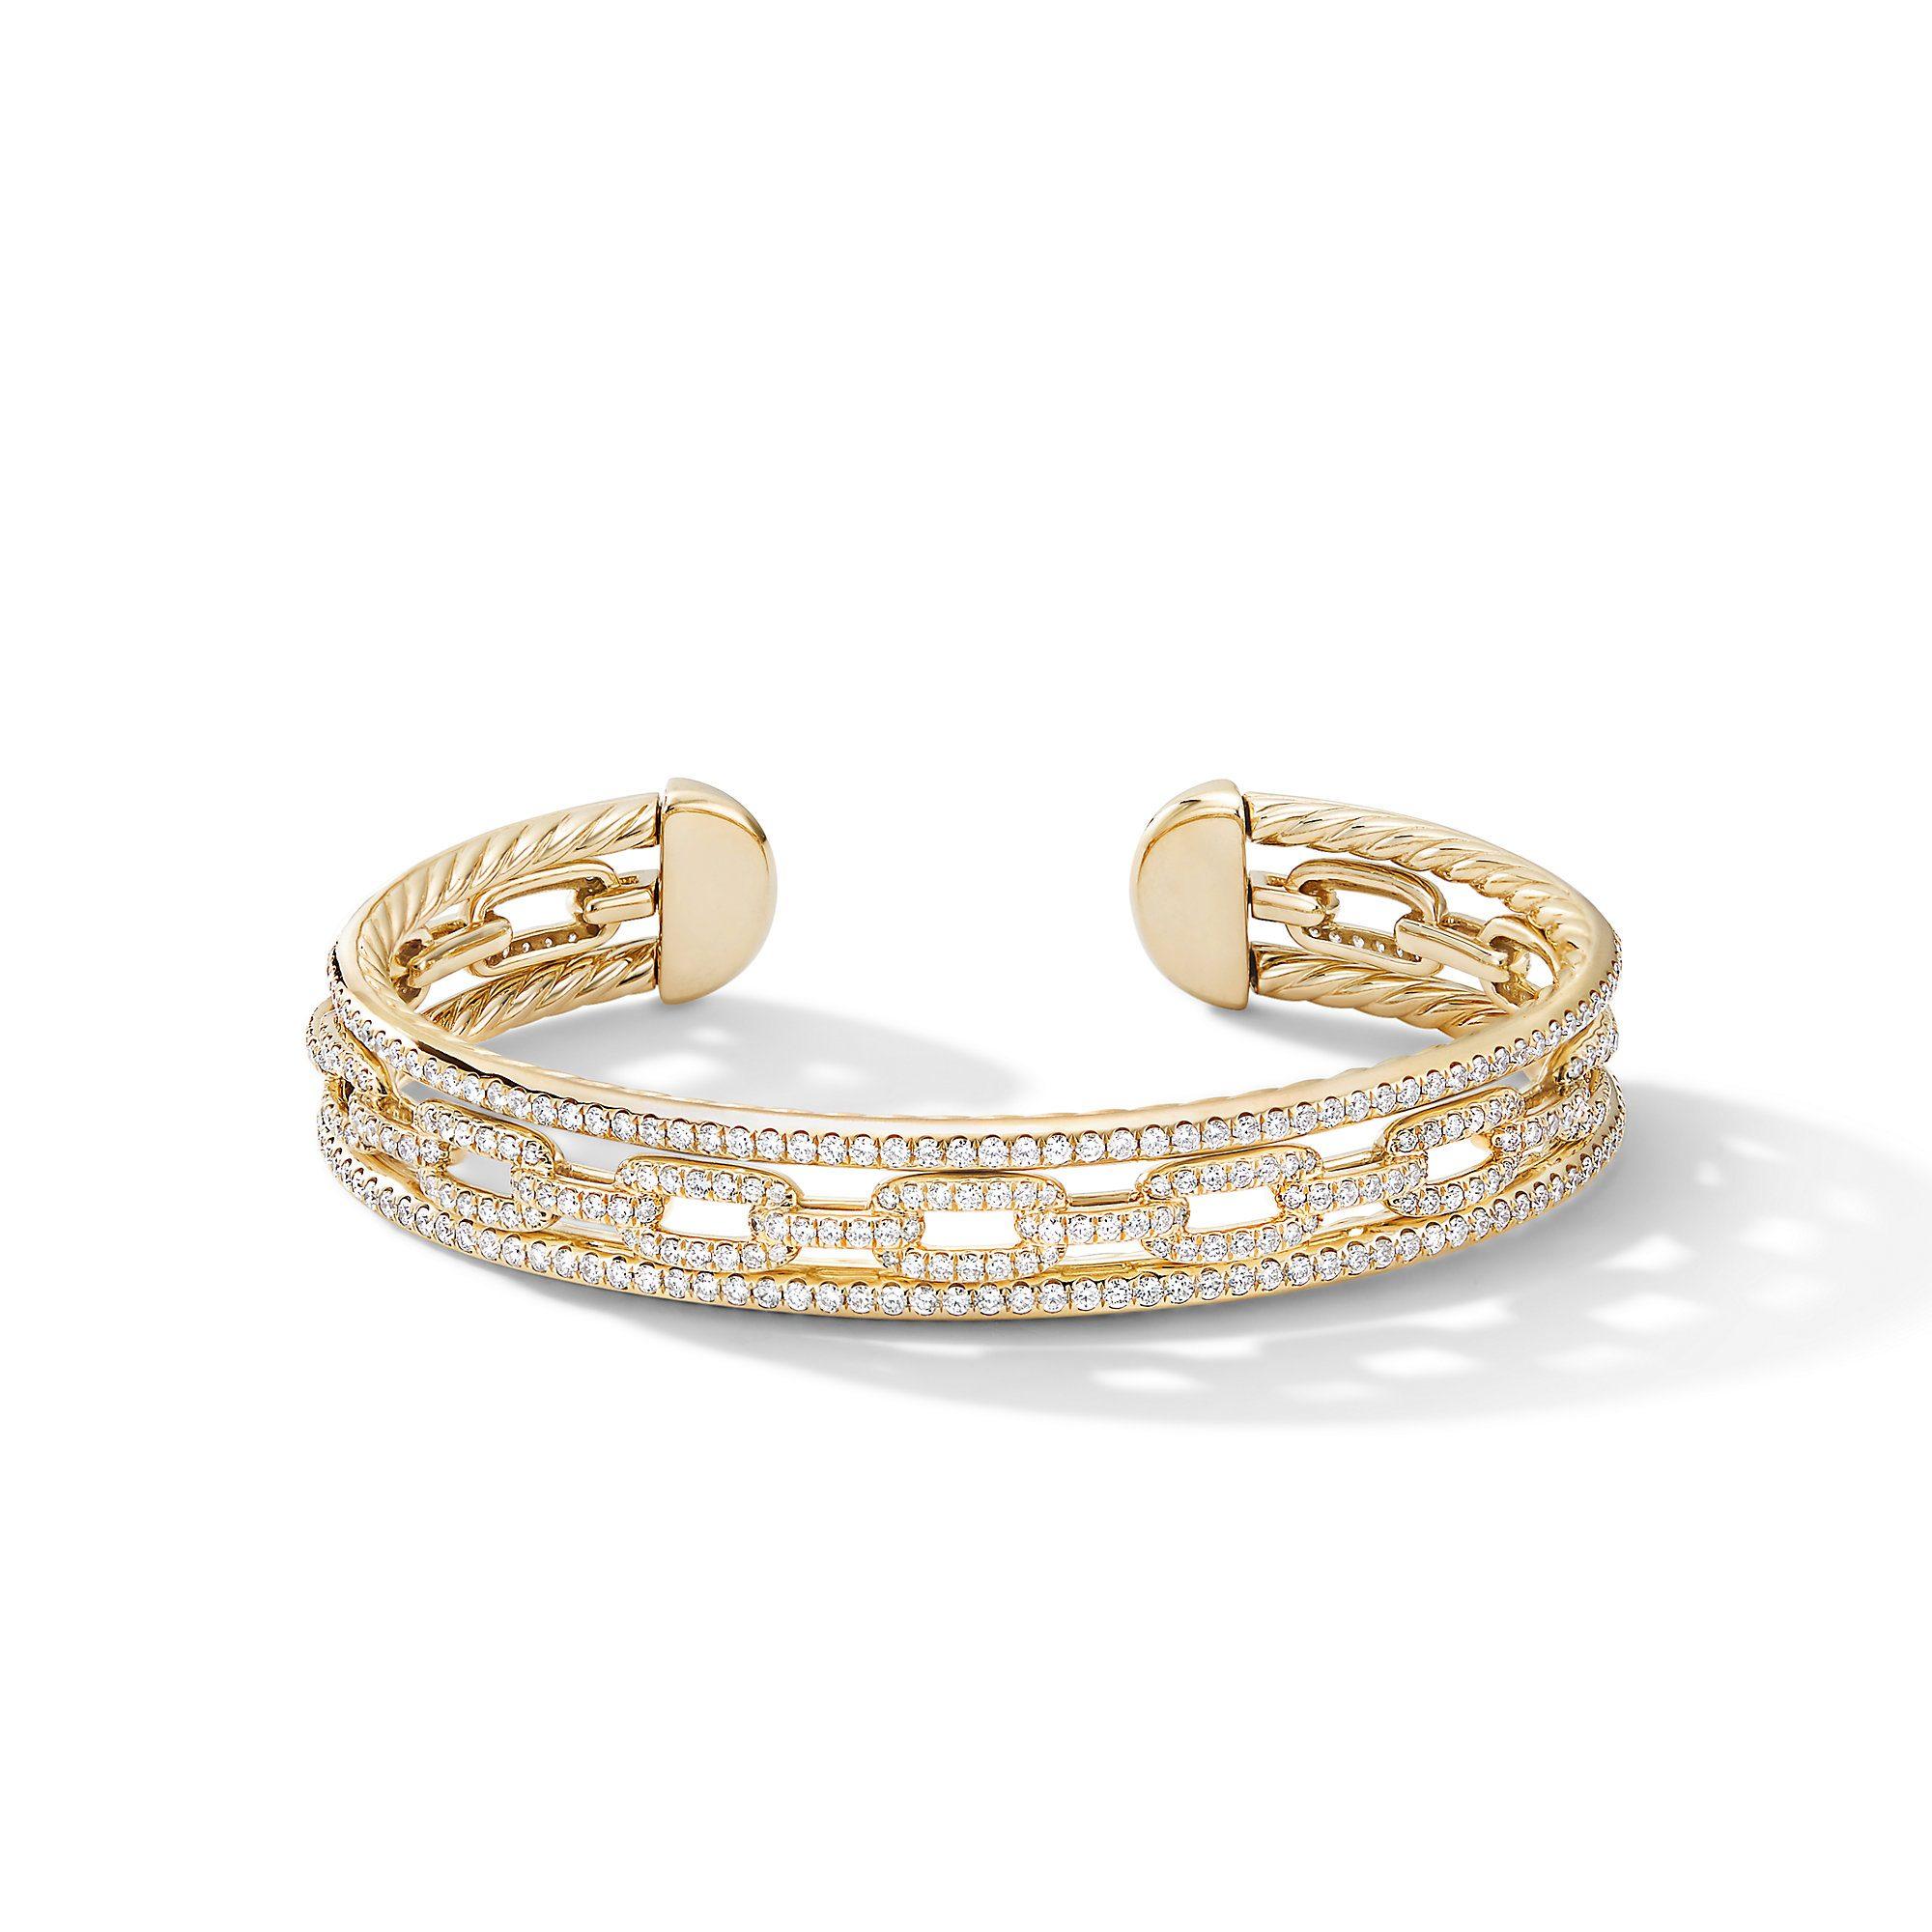 David Yurman Stax Three-Row Chain Link Bracelet in 18k Yellow Gold with Diamonds